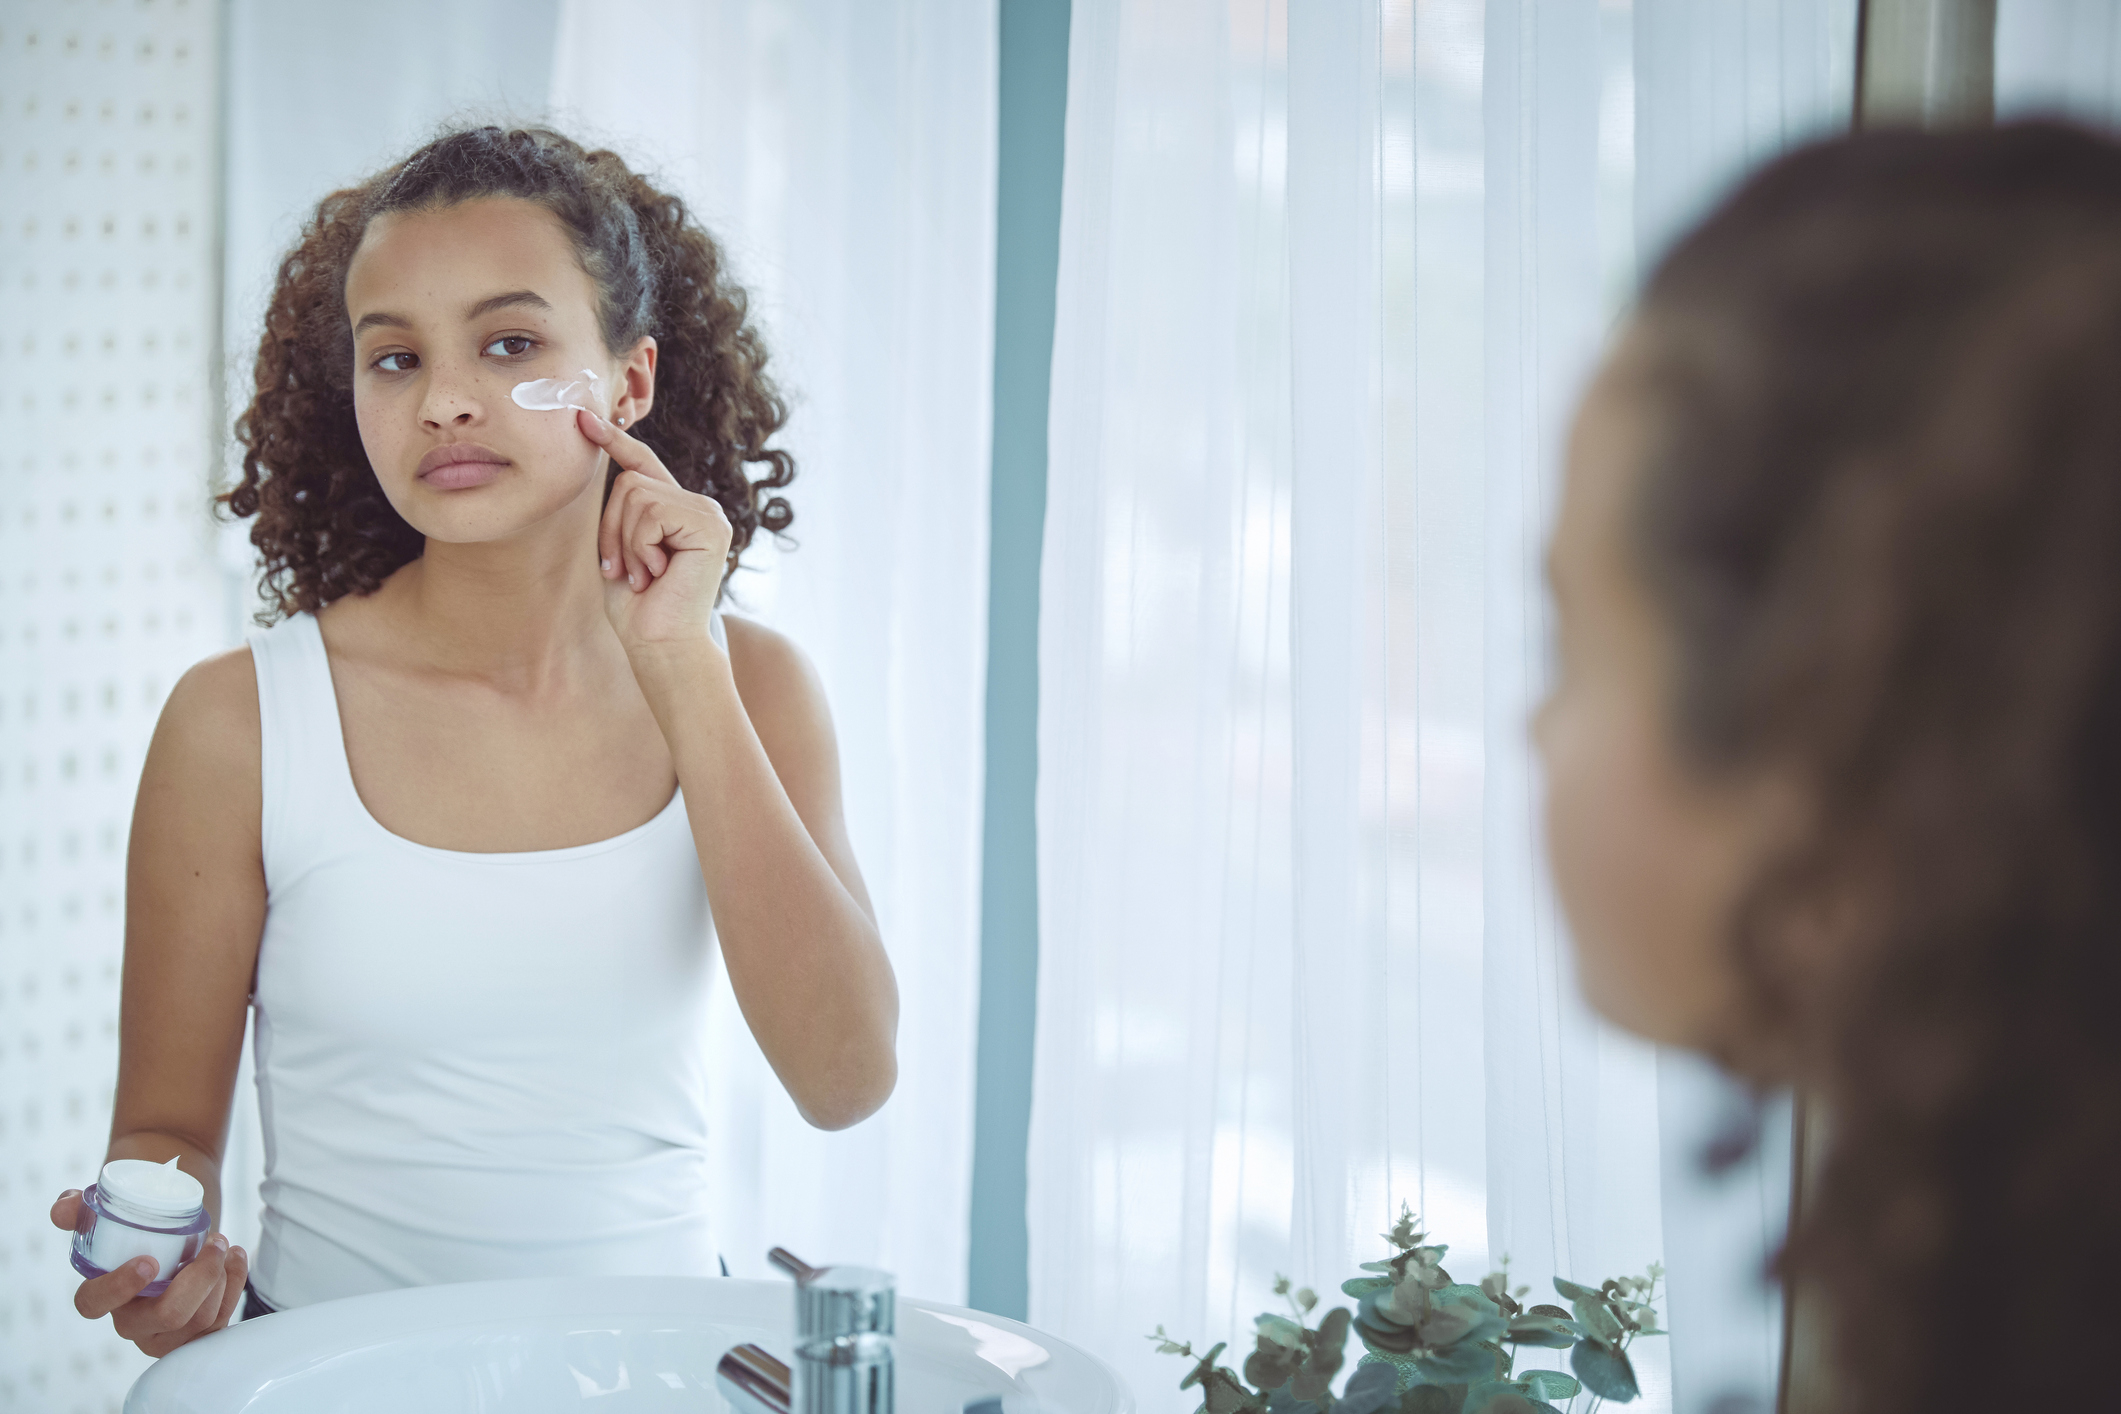 Young person applying facial cream, reflected in a bathroom mirror